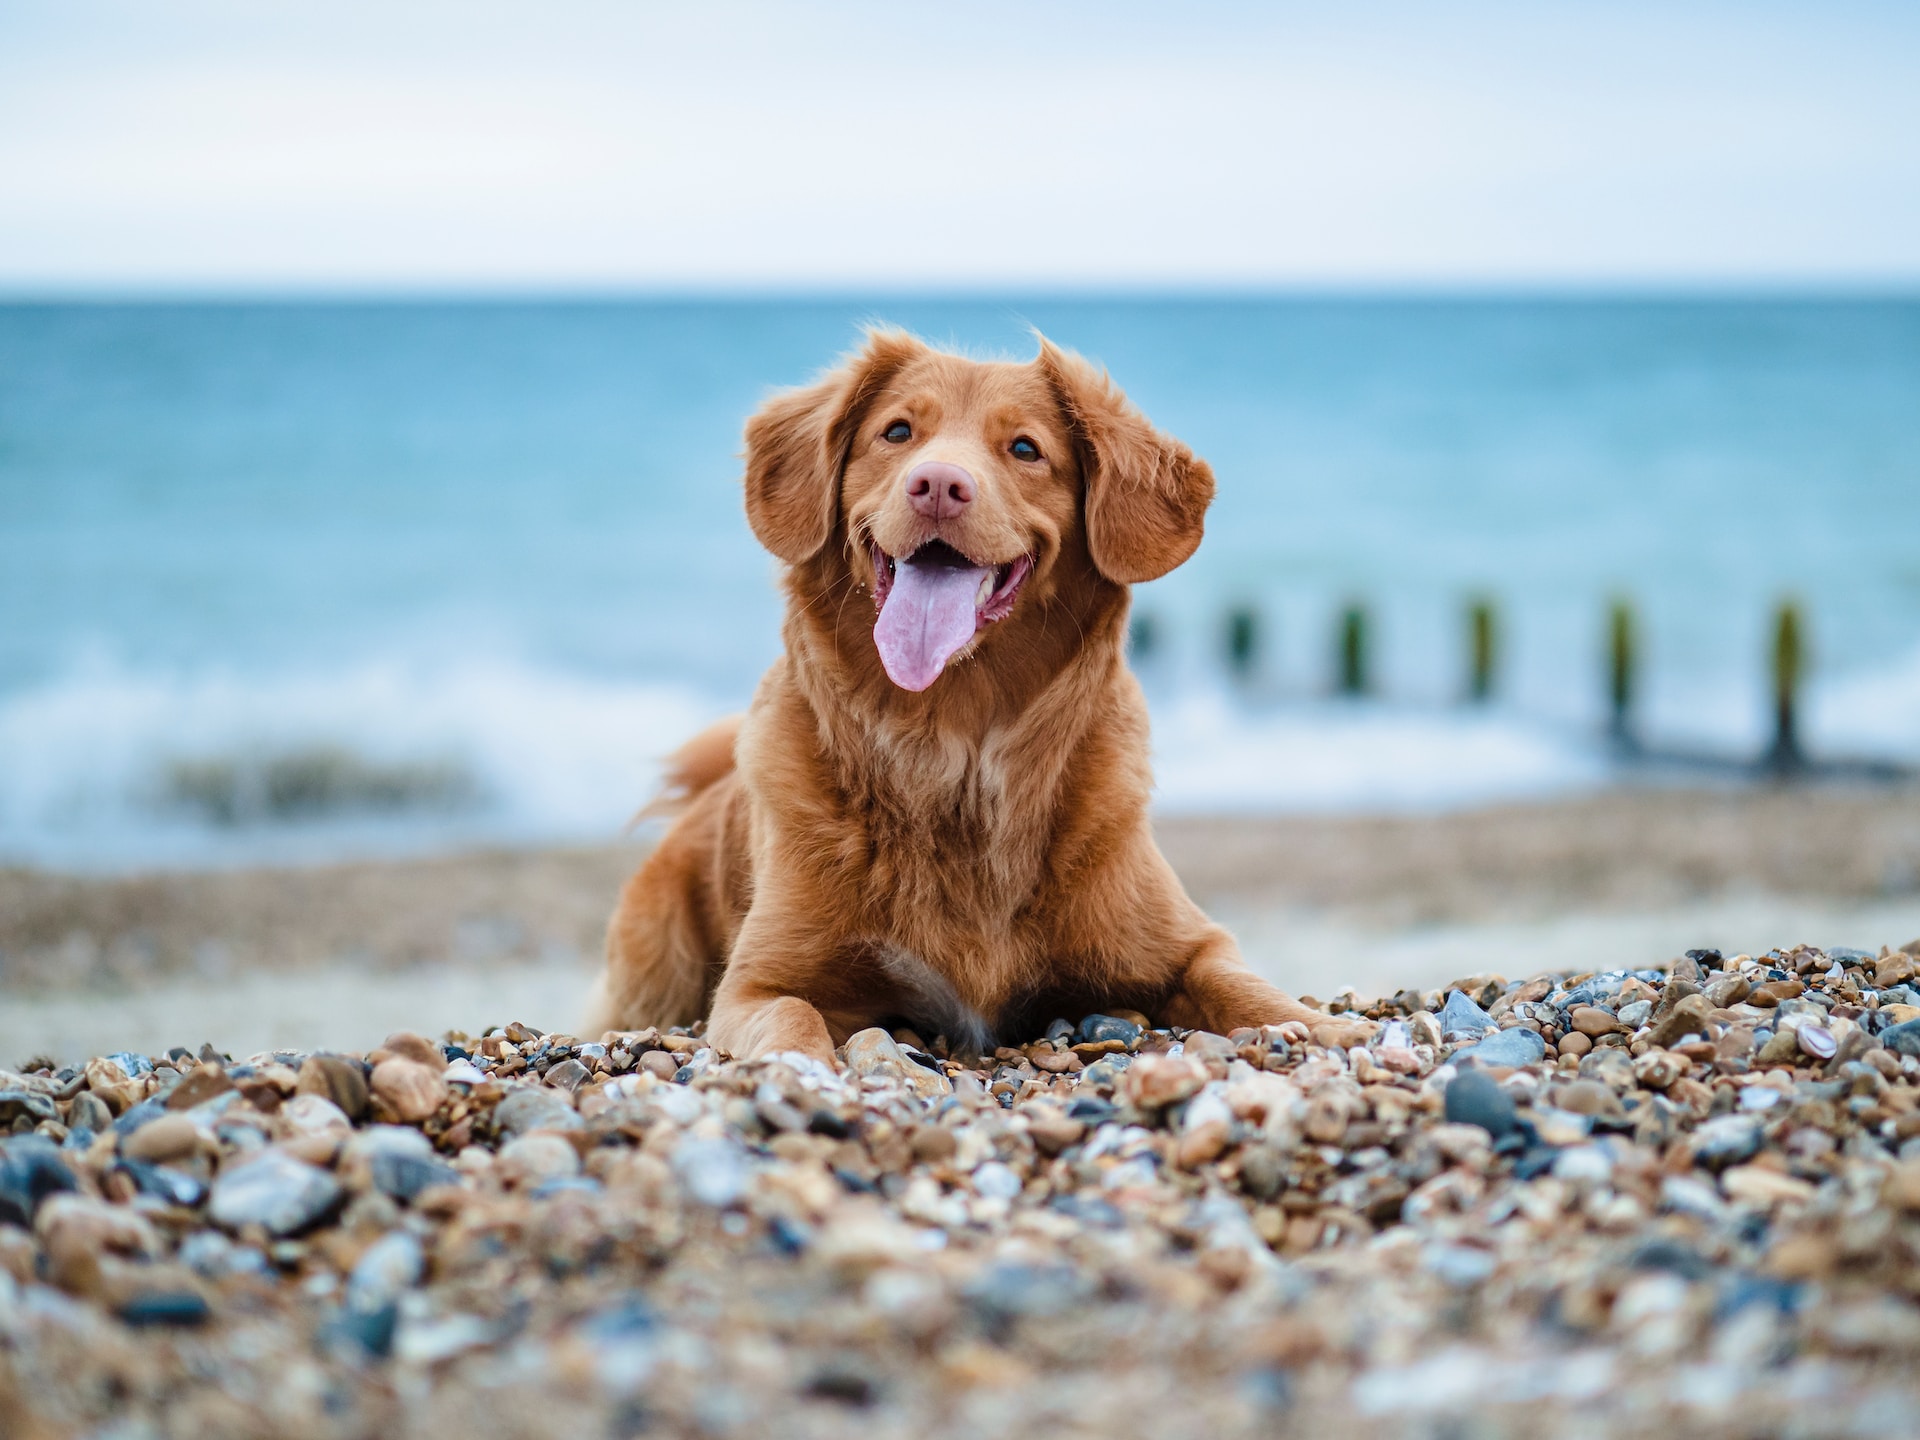 Dog resting on a stony beach.